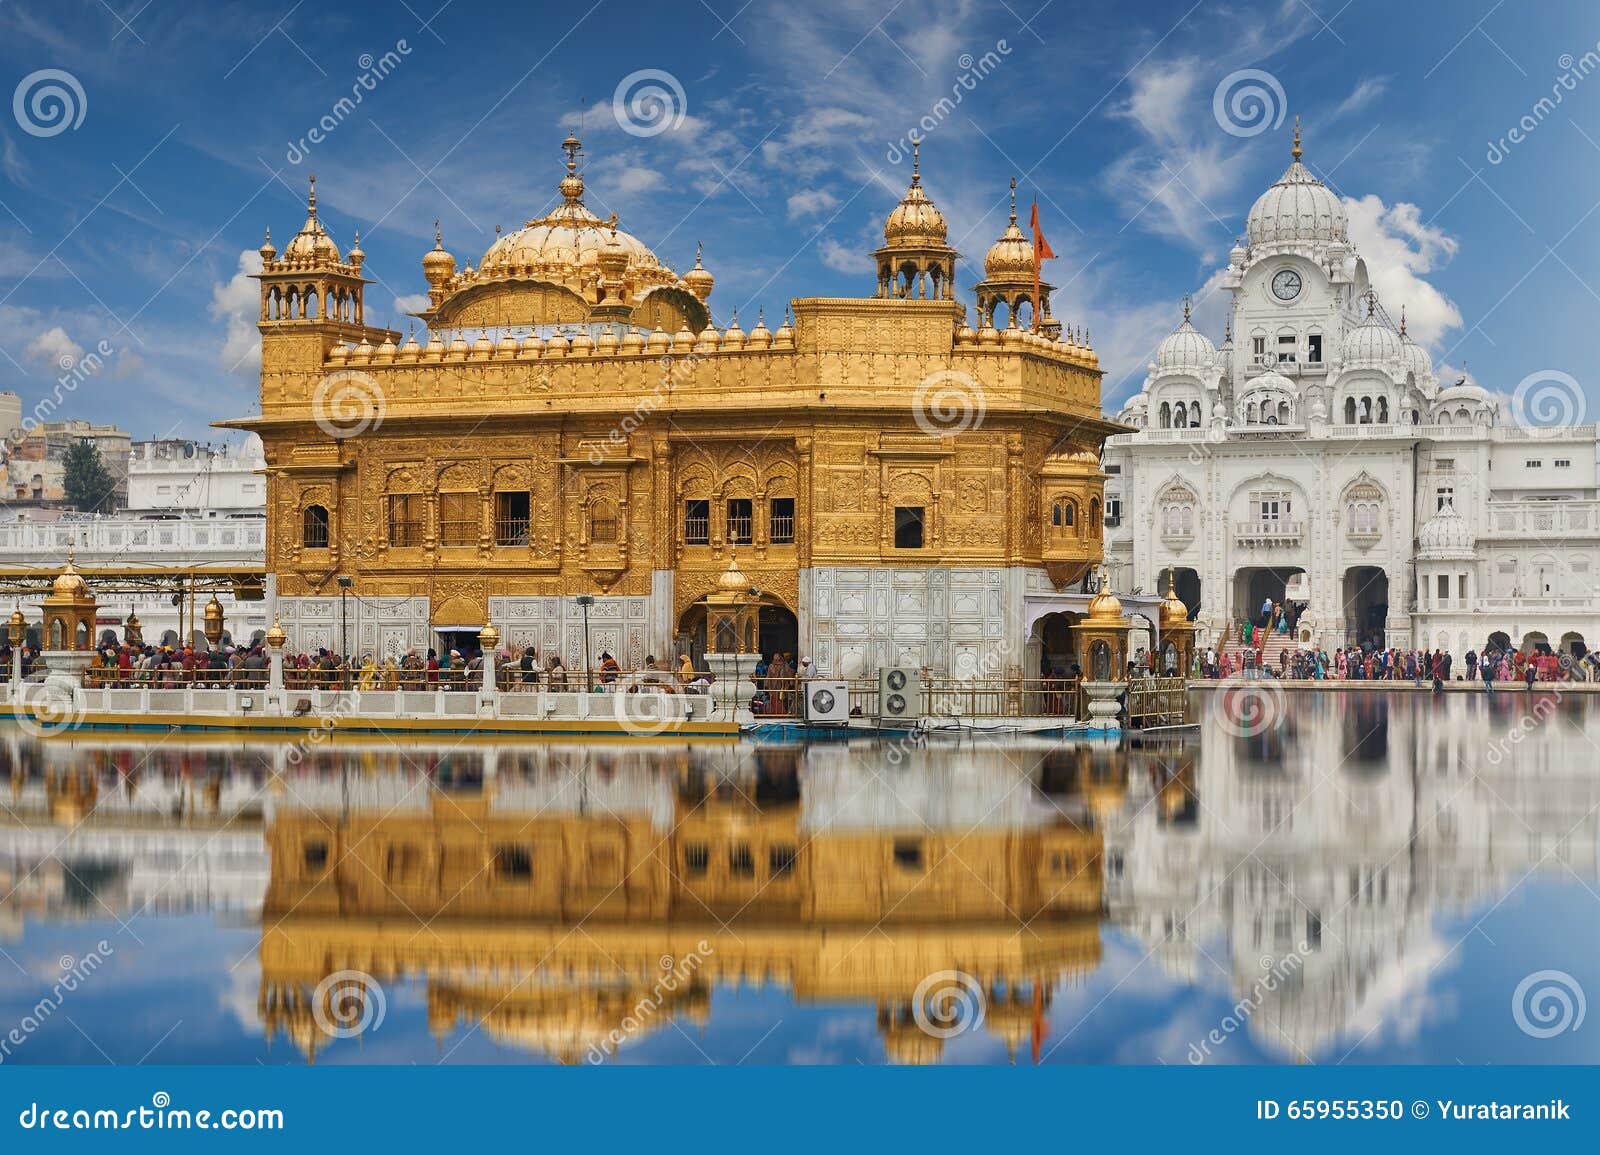 Golden Temple, Amritsar, Punjab, India Editorial Photo - Image of flock,  amritsar: 14896786